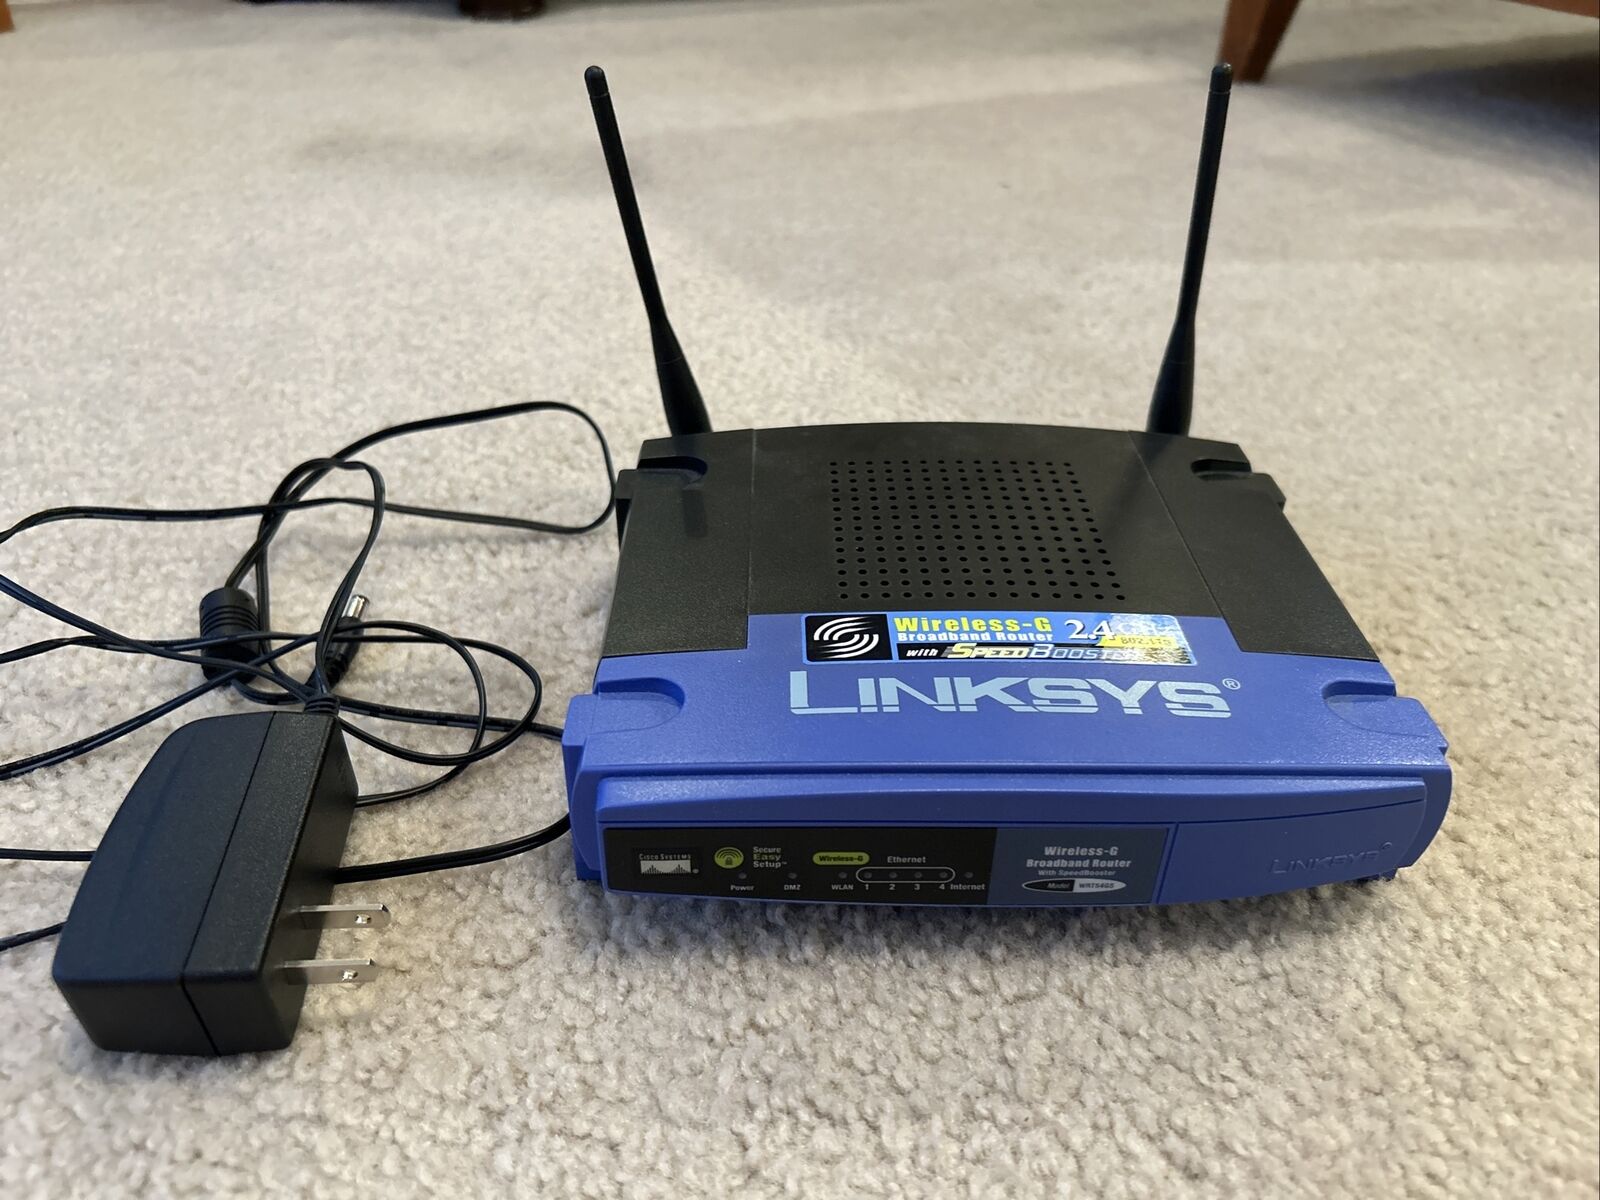 Linksys WRT54G Wireless-G 2.4 Ghz Broadband 4PORT 802.11g Router